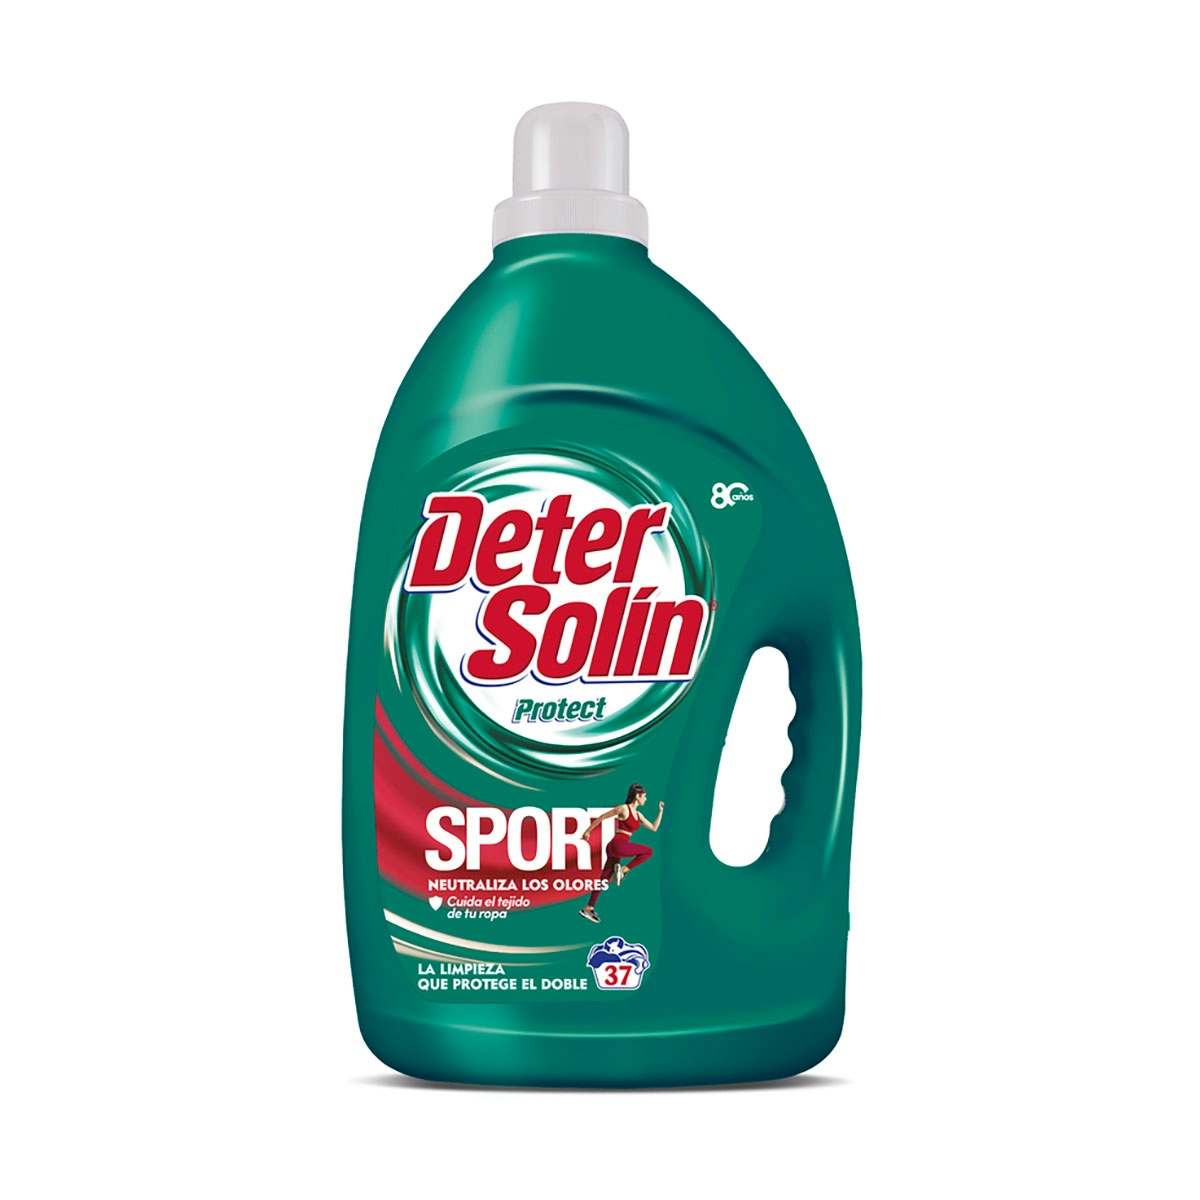 Detergente Líquido detersolin Protect Sport 37 lavados